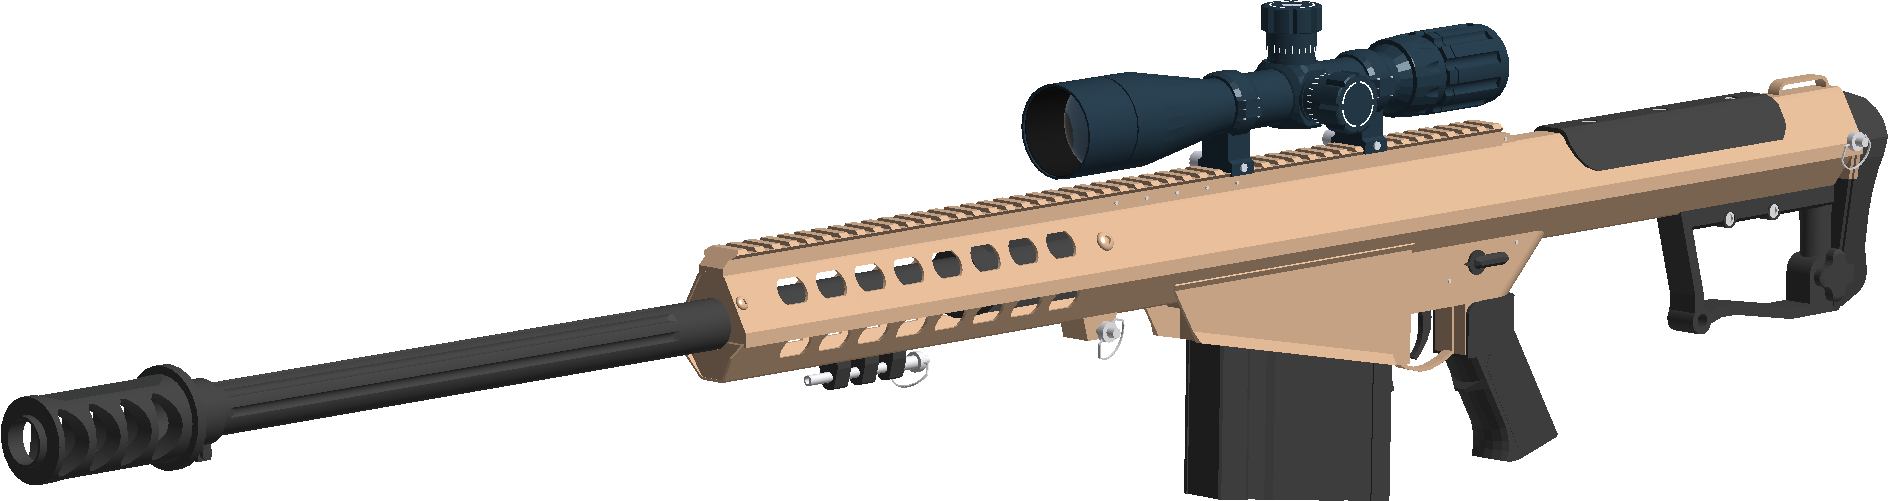 So NERF made a .50 CAL Barrett M82 Sniper Rifle 